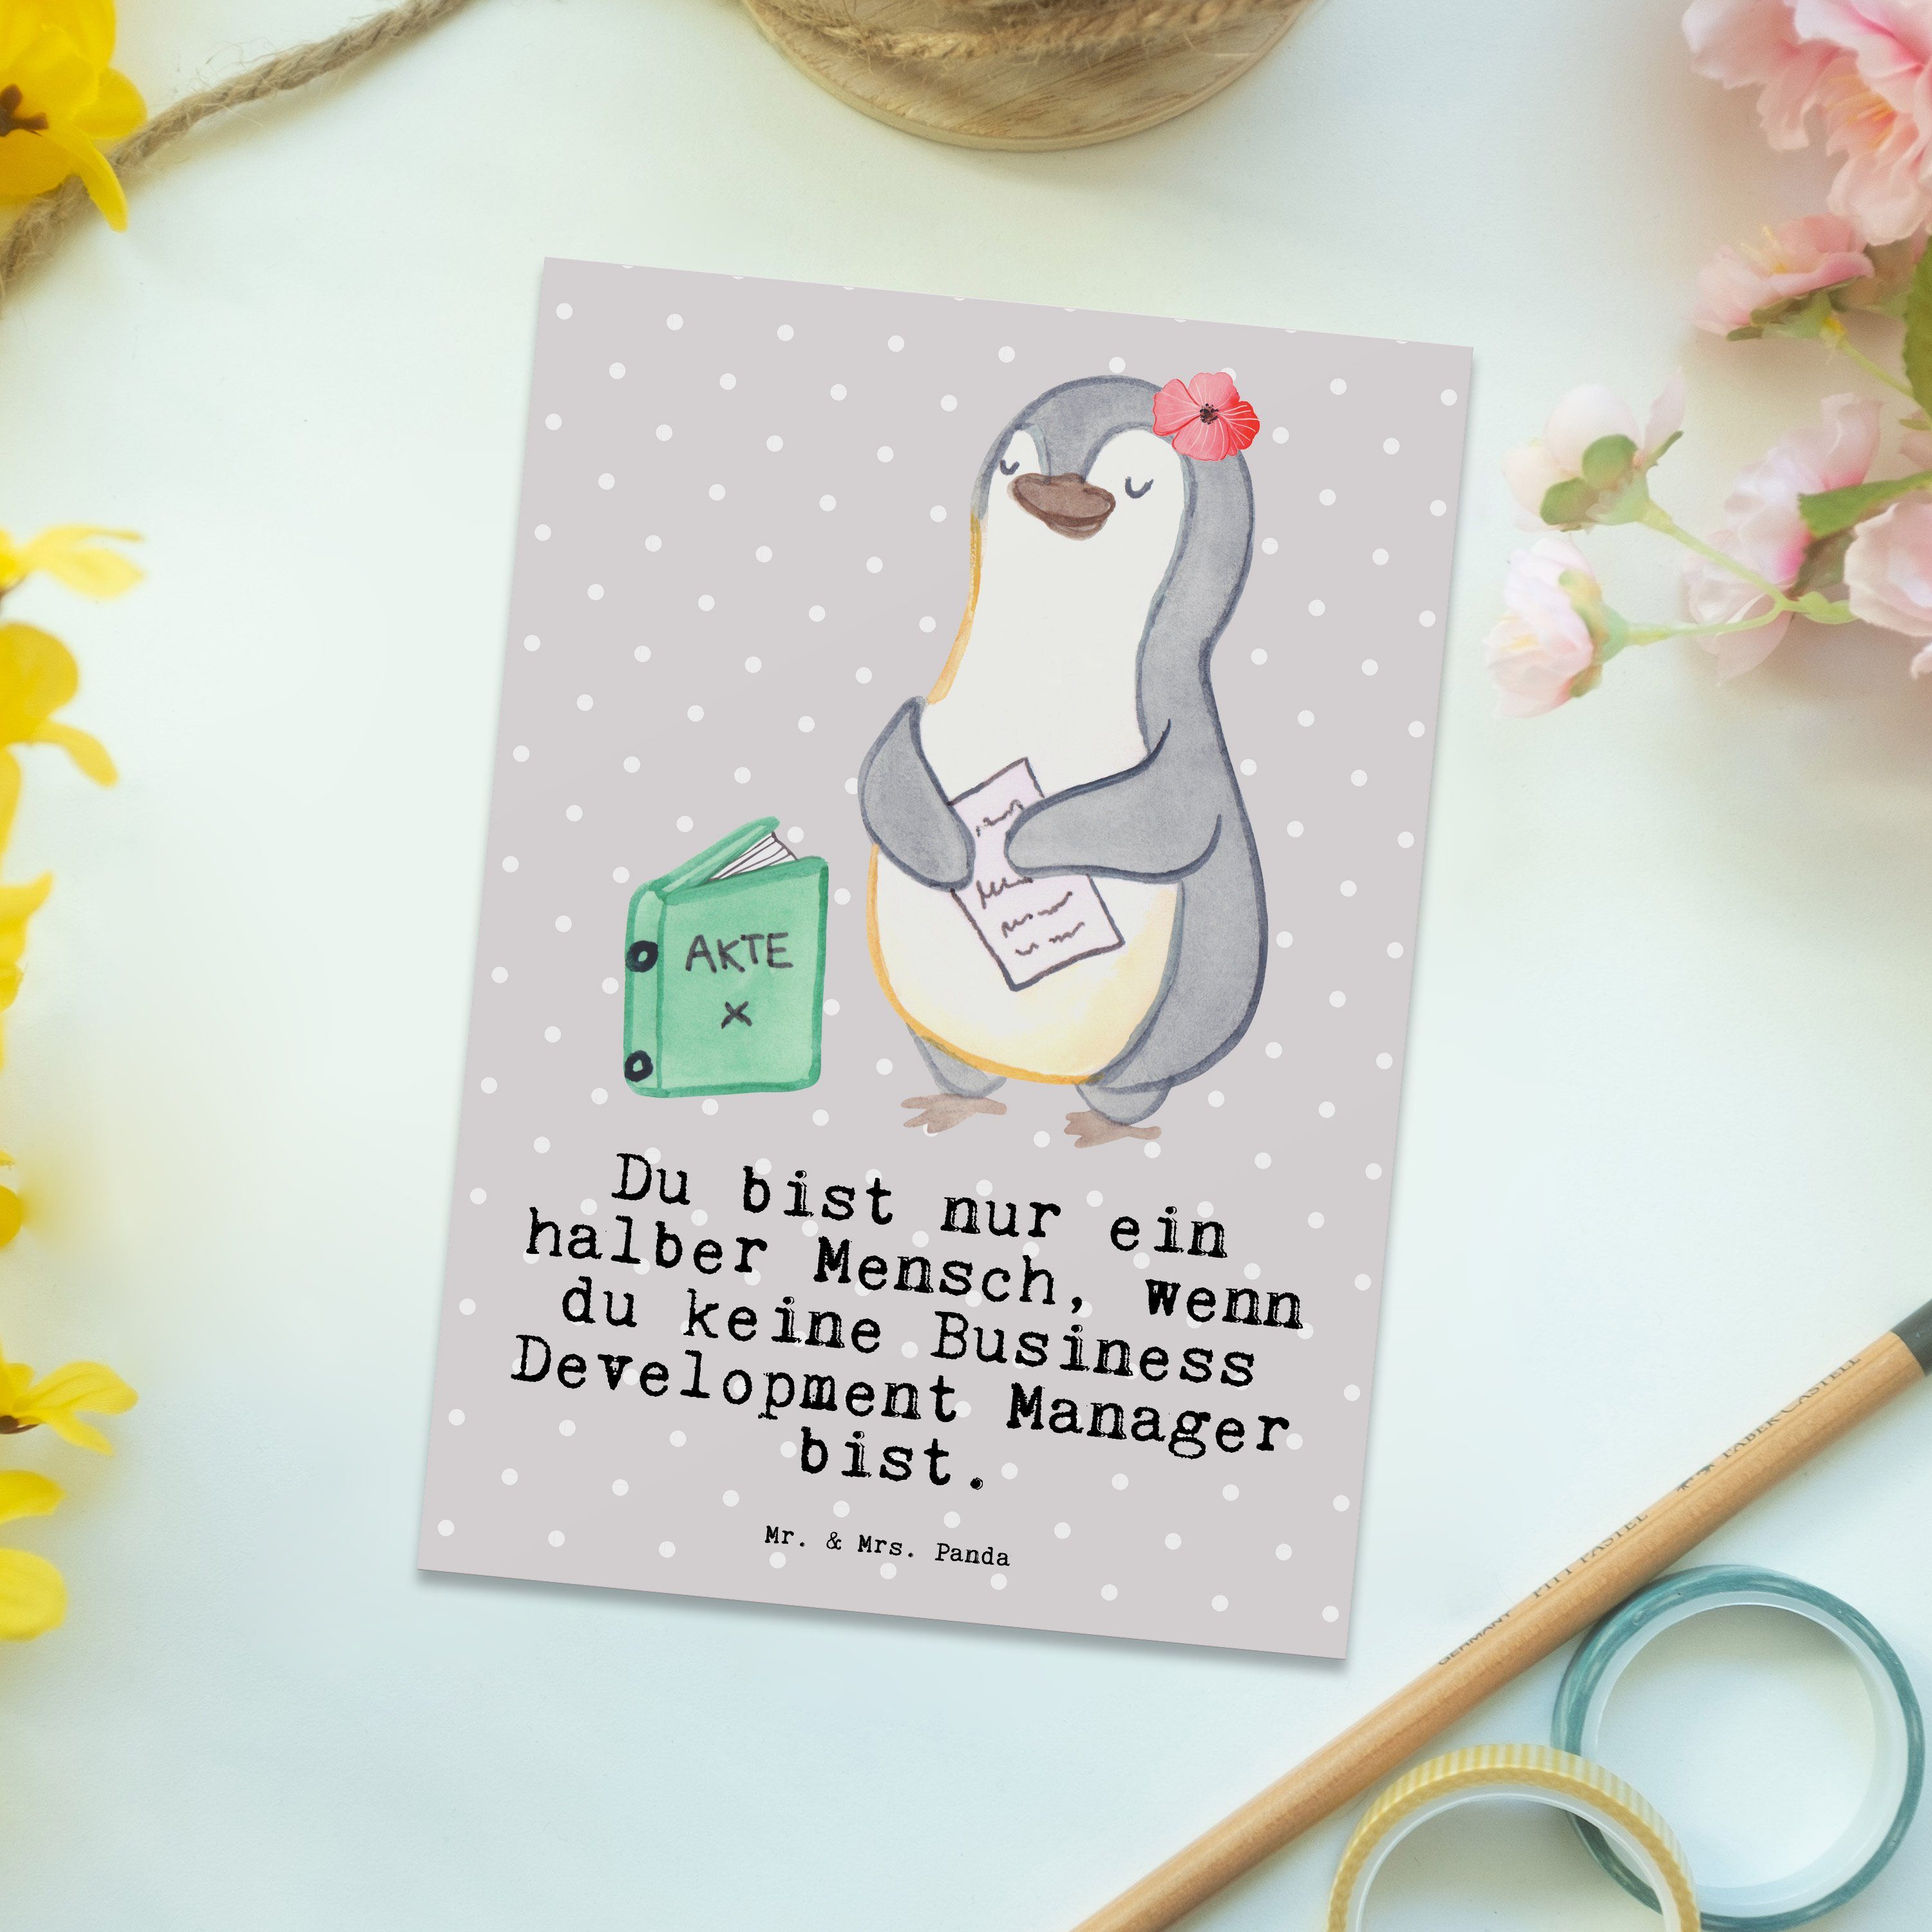 Mr. Herz Geschenk, Pastell Grau Kart Business - Development Postkarte Manager mit & Panda Mrs. -